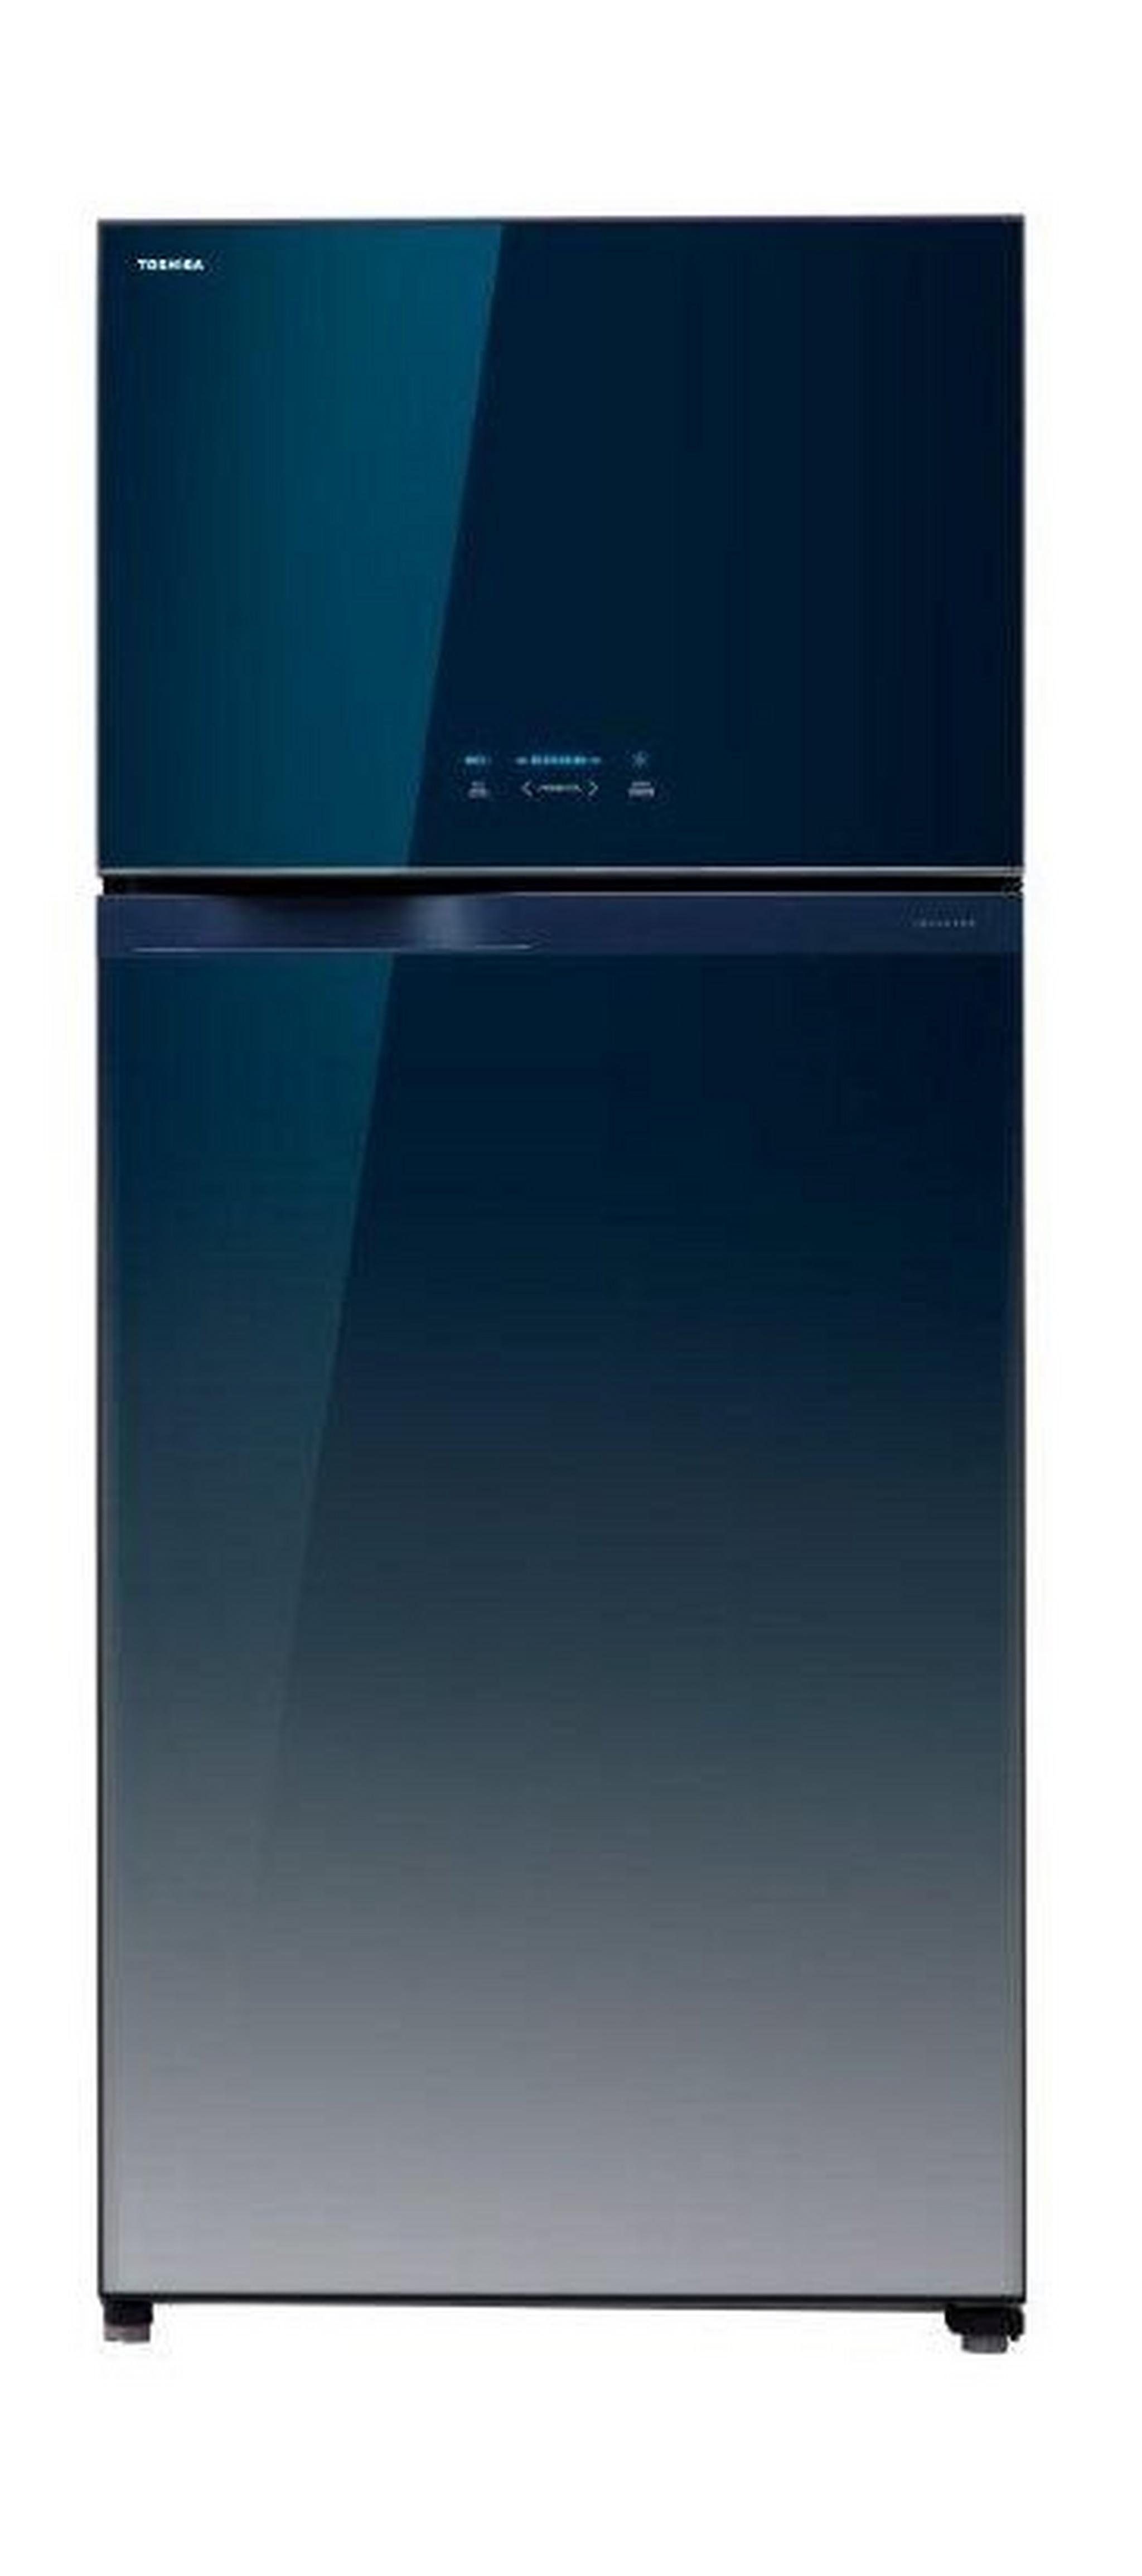 Toshiba Top Mount Refrigerator, 25CFT, 710-Liters, GR-AG820U - Dark Blue